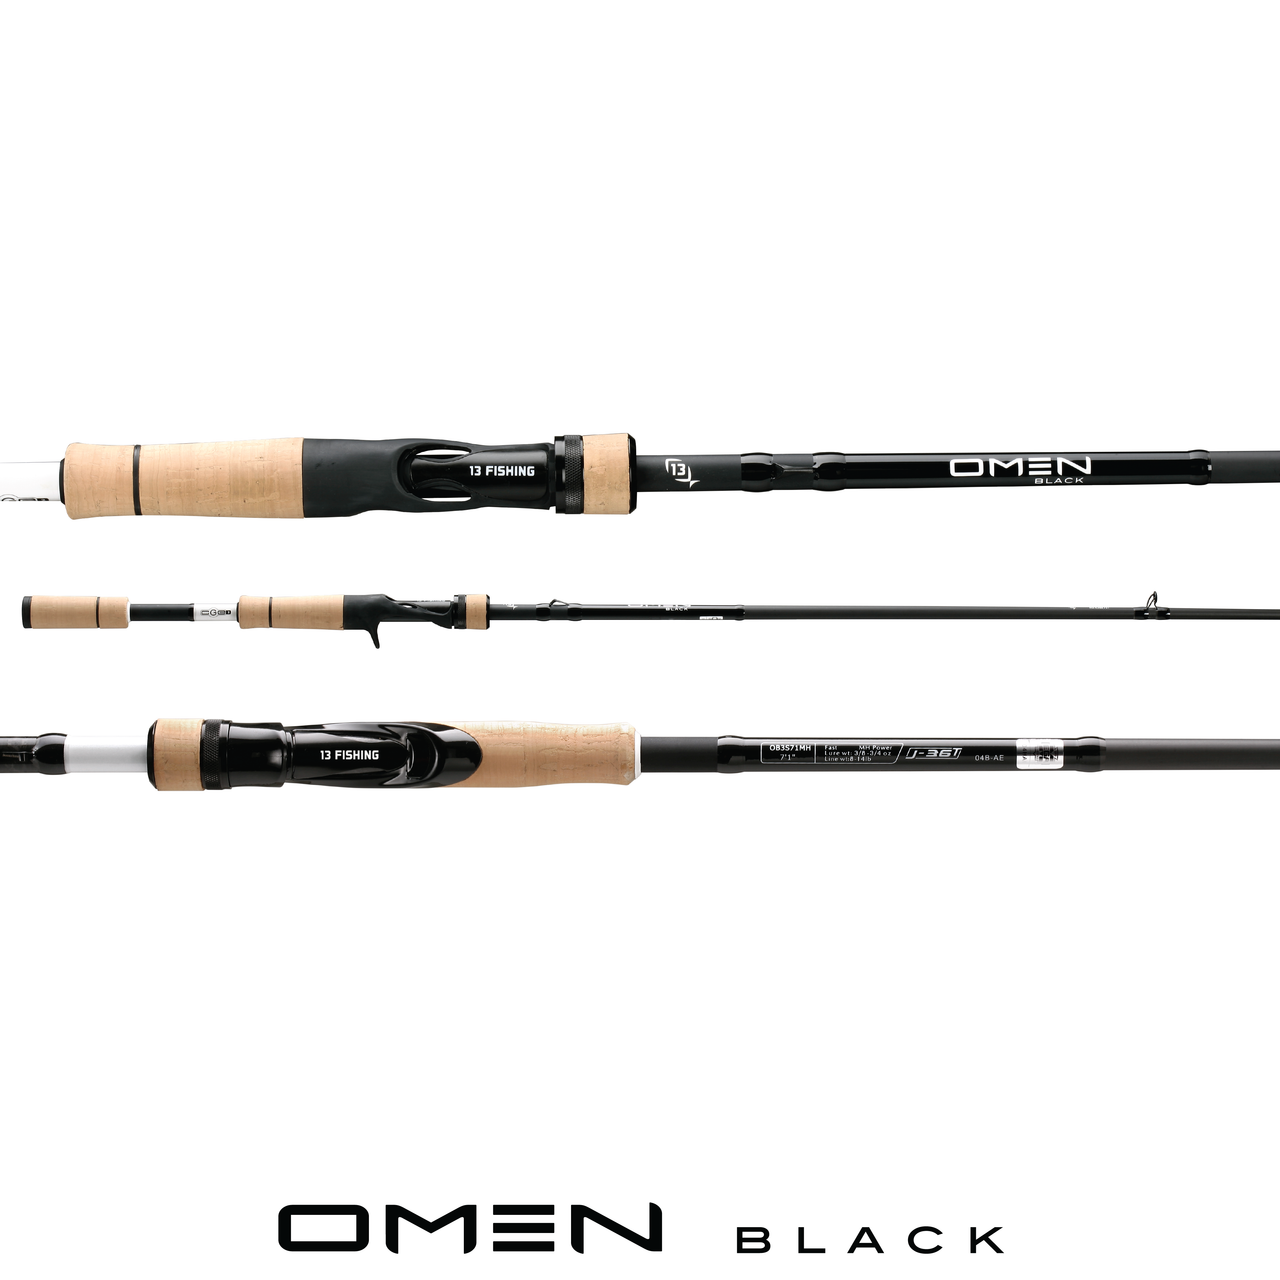 13 Fishing Omen Black Fishing Rod - McCredden's